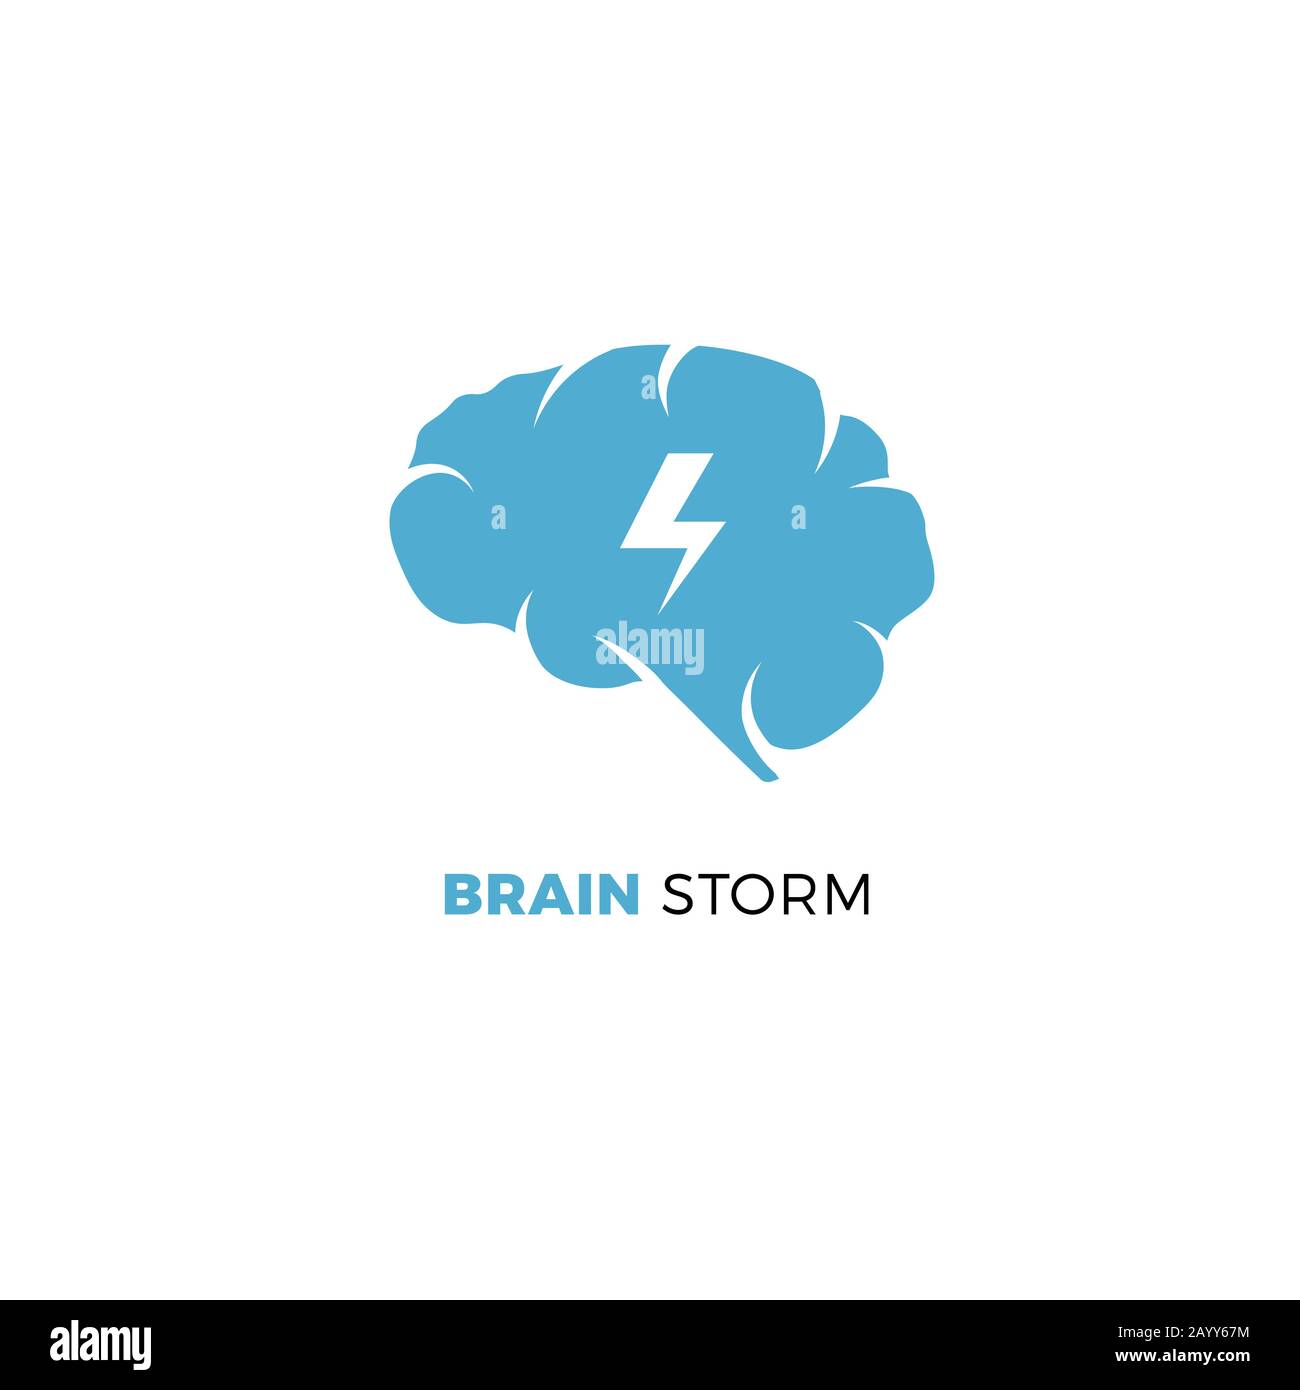 Brainstorming für kreative Ideen, Smart Cloud Vector Concept. Business Brainstorming-Konzept oder Brainstorming-Logo-Vorlage Stock Vektor